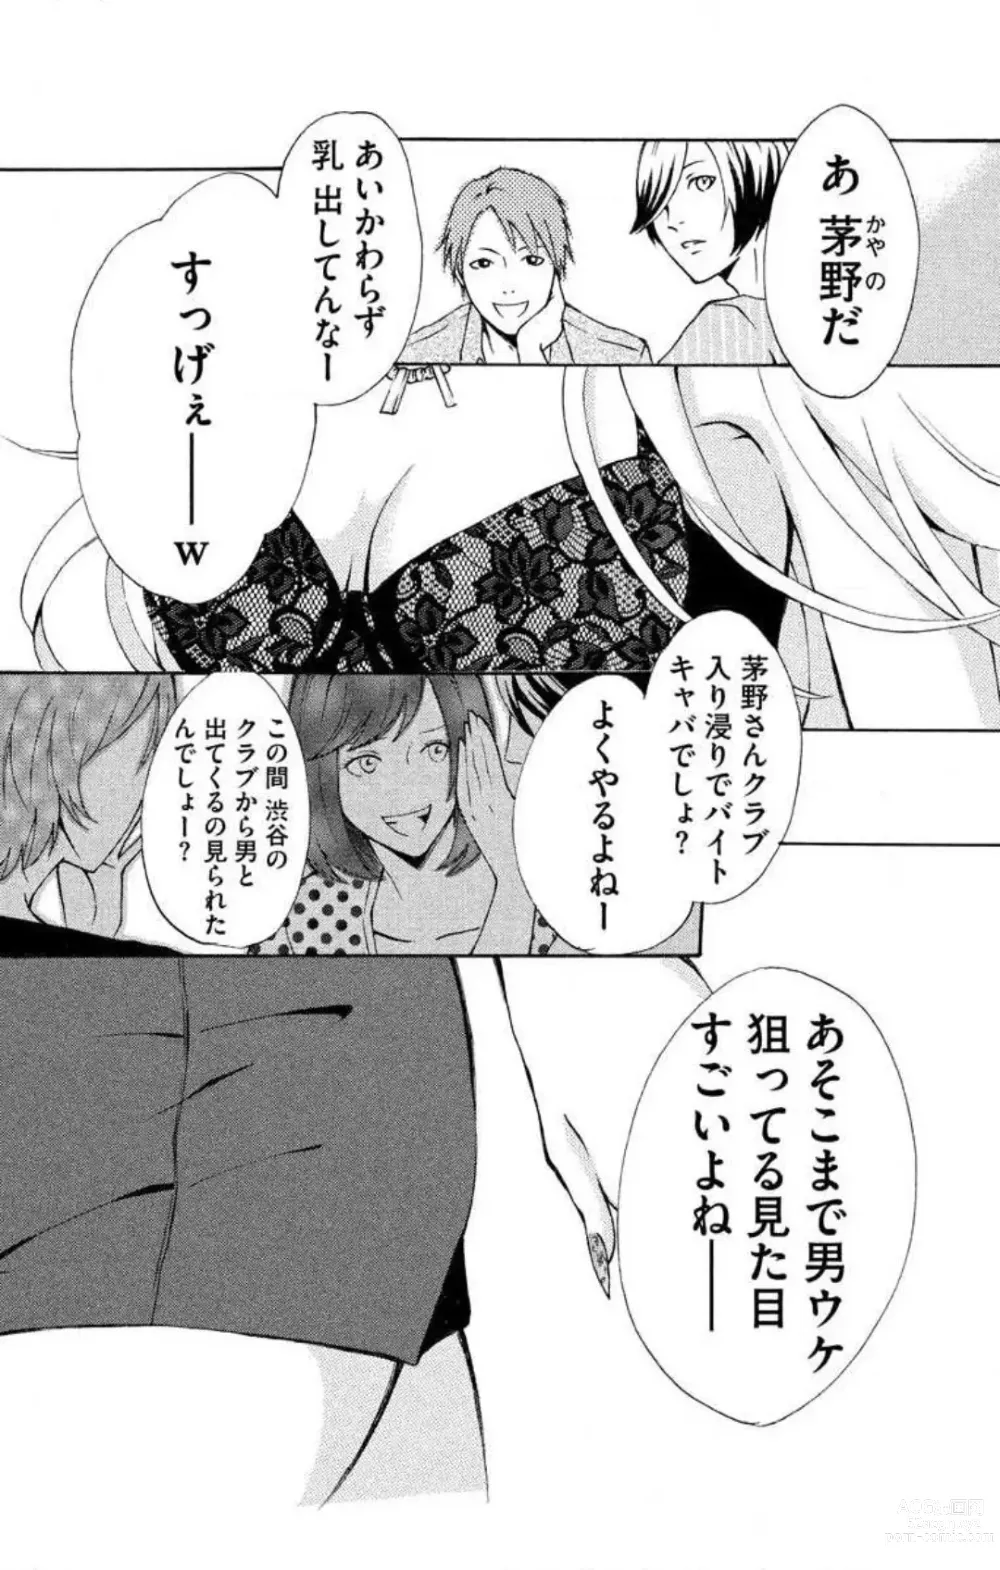 Page 2 of manga Mousou Shoujo 1-20